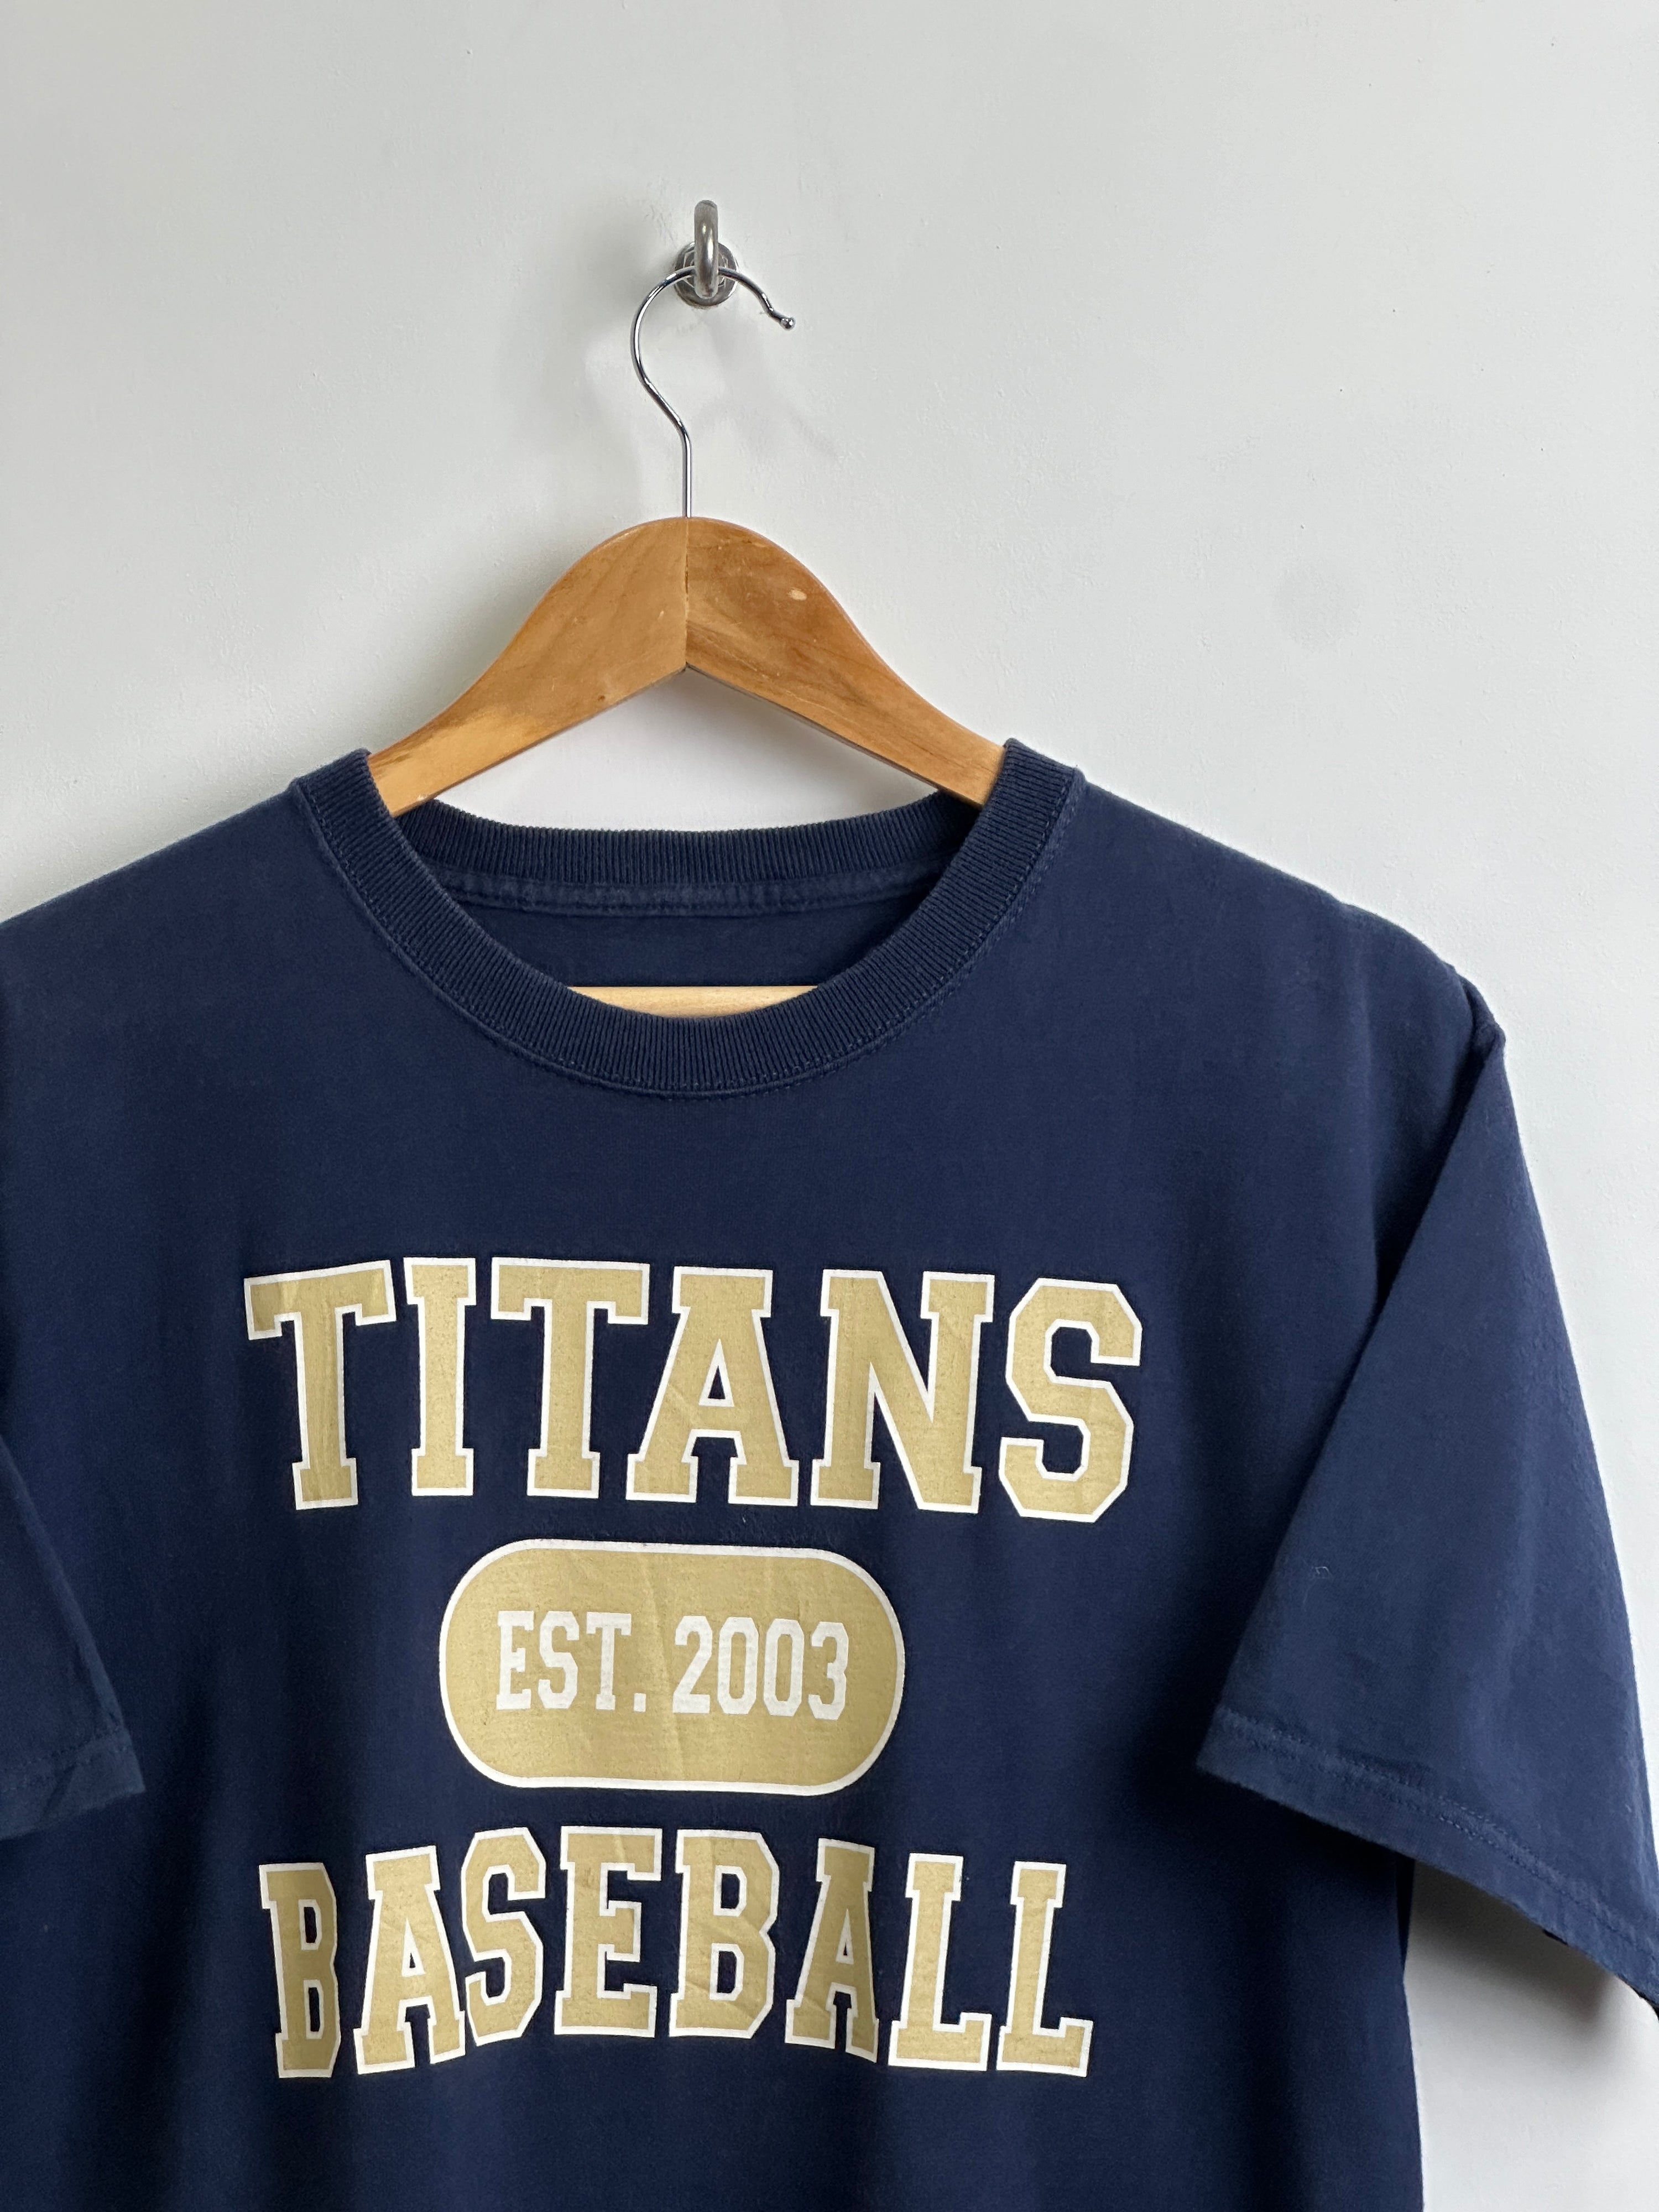 Titans Baseball tee in blue